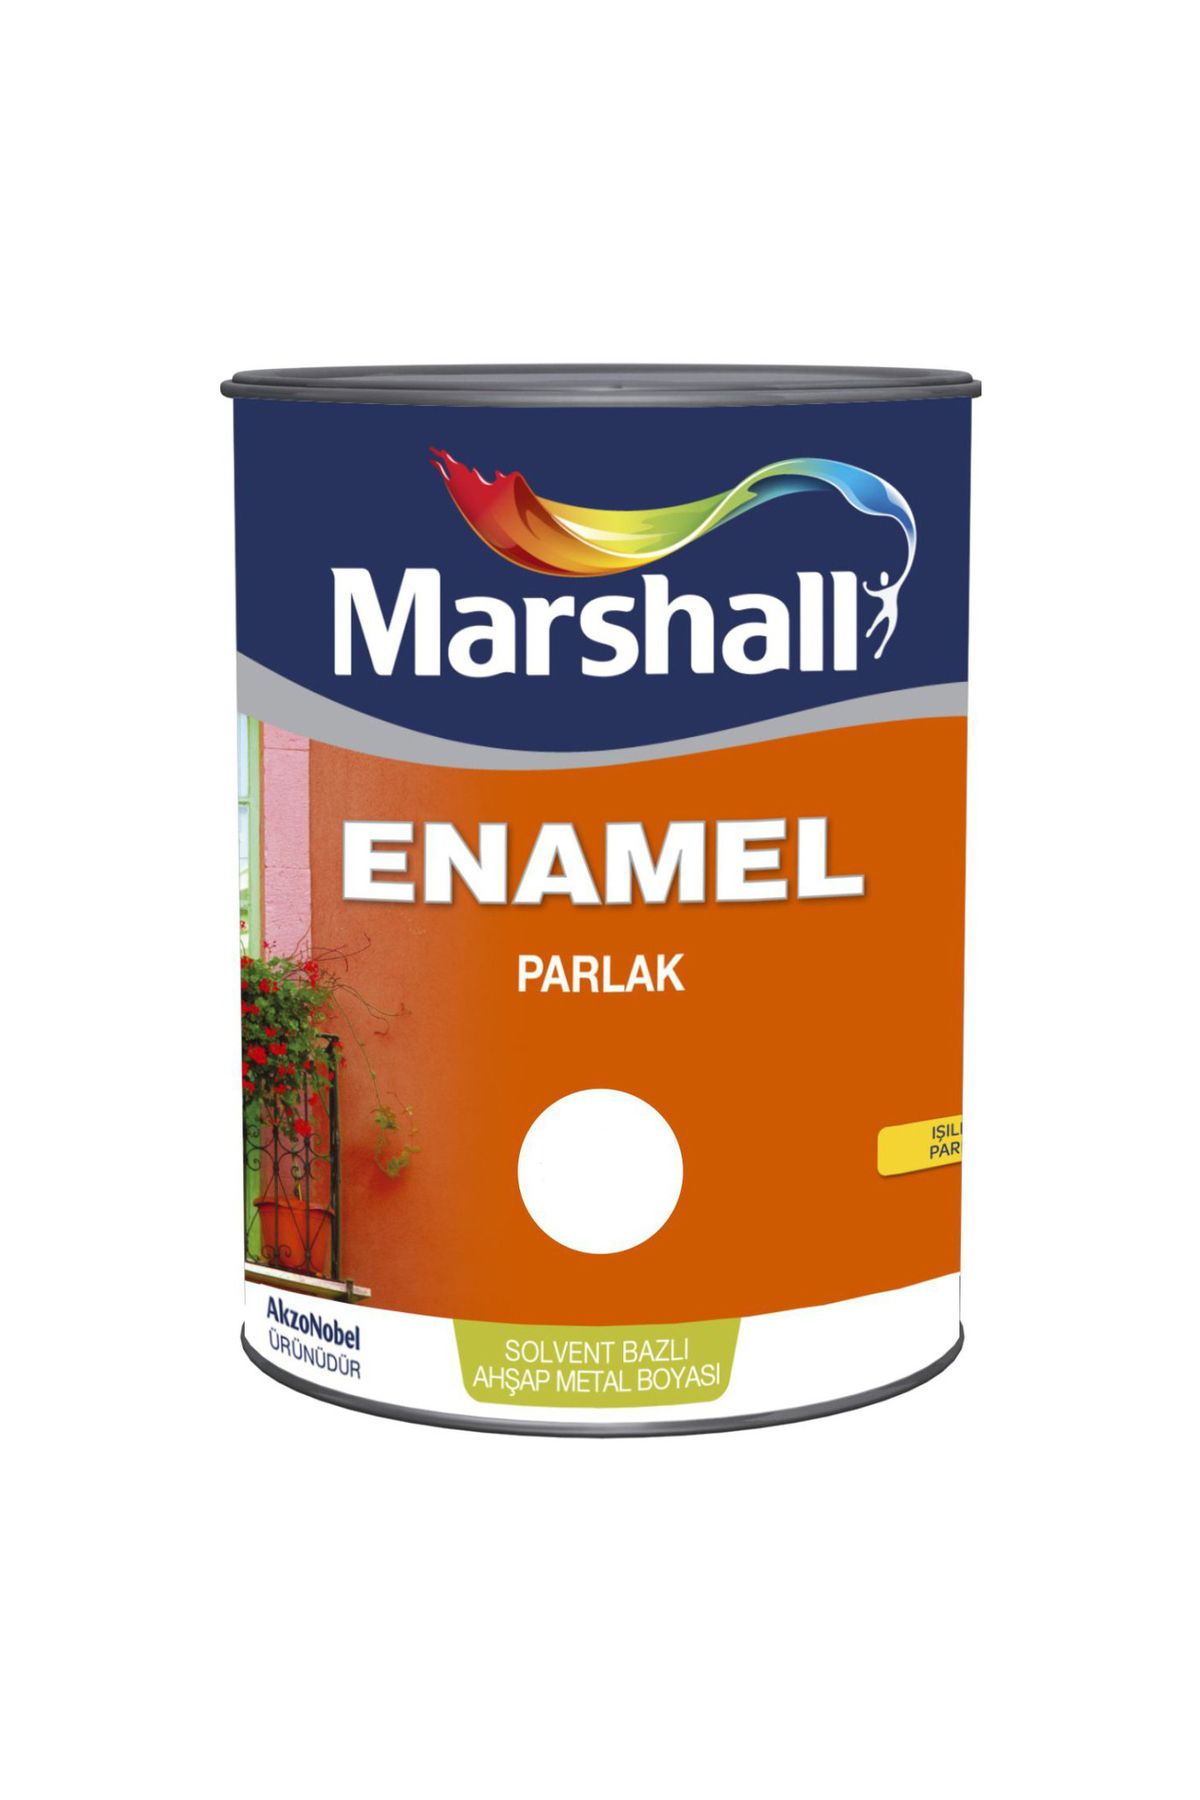 Marshall ENAMEL PARLAK KREM 2.5 LİTRE